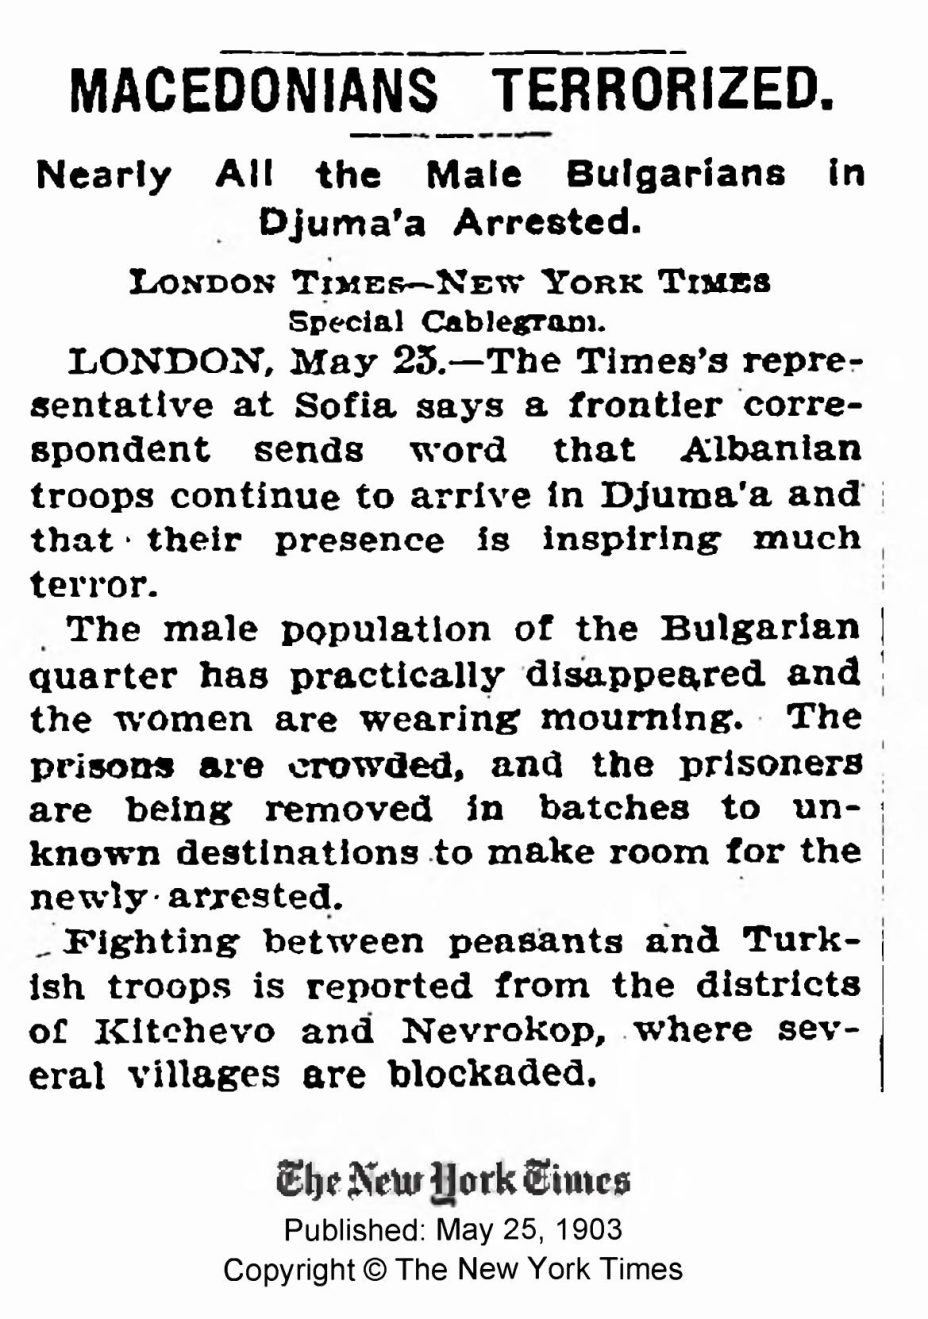 1903.05.25_The New York Times - Macedonians terrorized